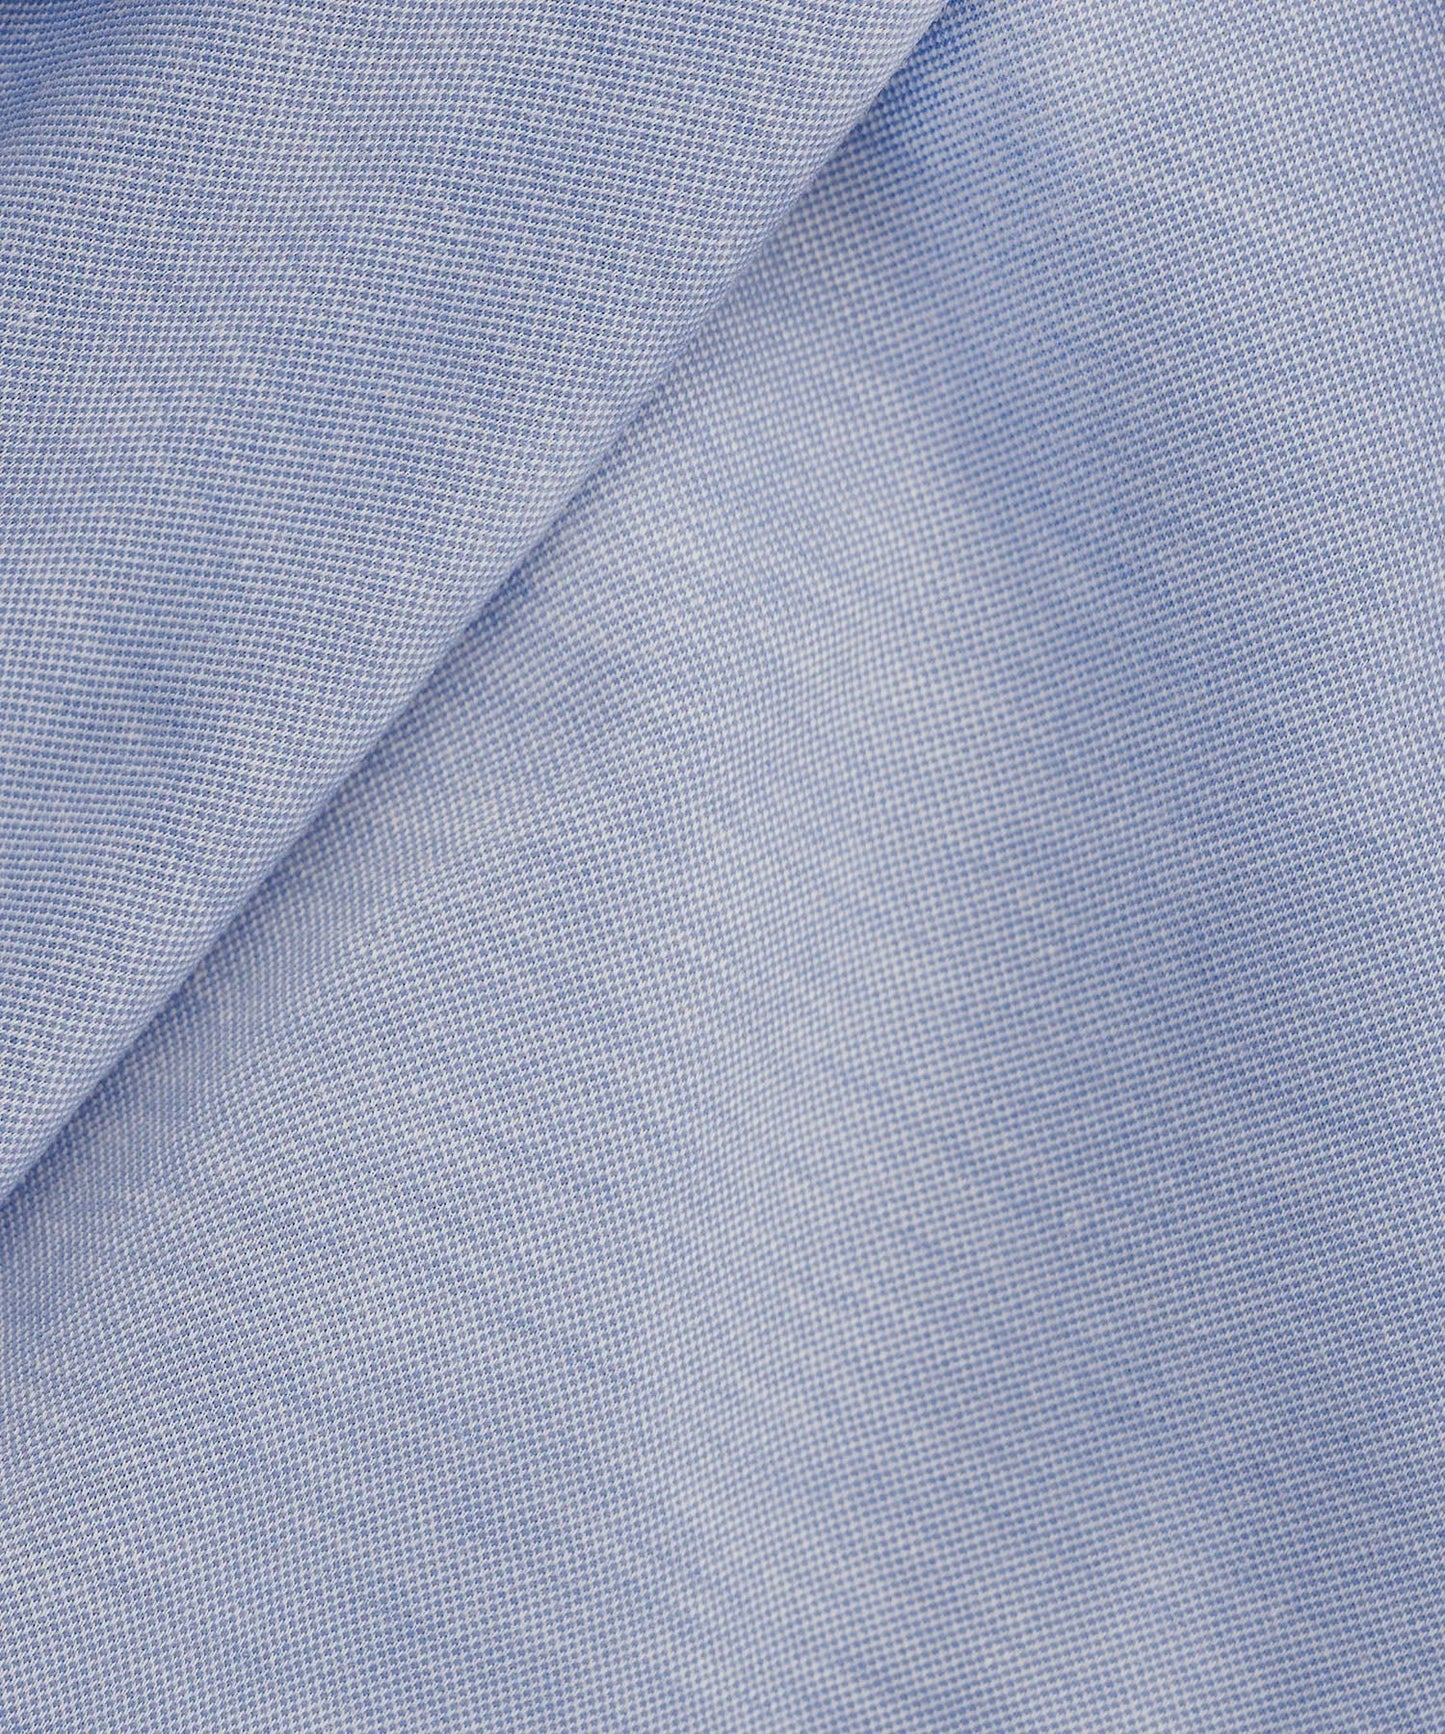 Profuomo Japanese knitted overhemd katoen blauw - The Society Shop